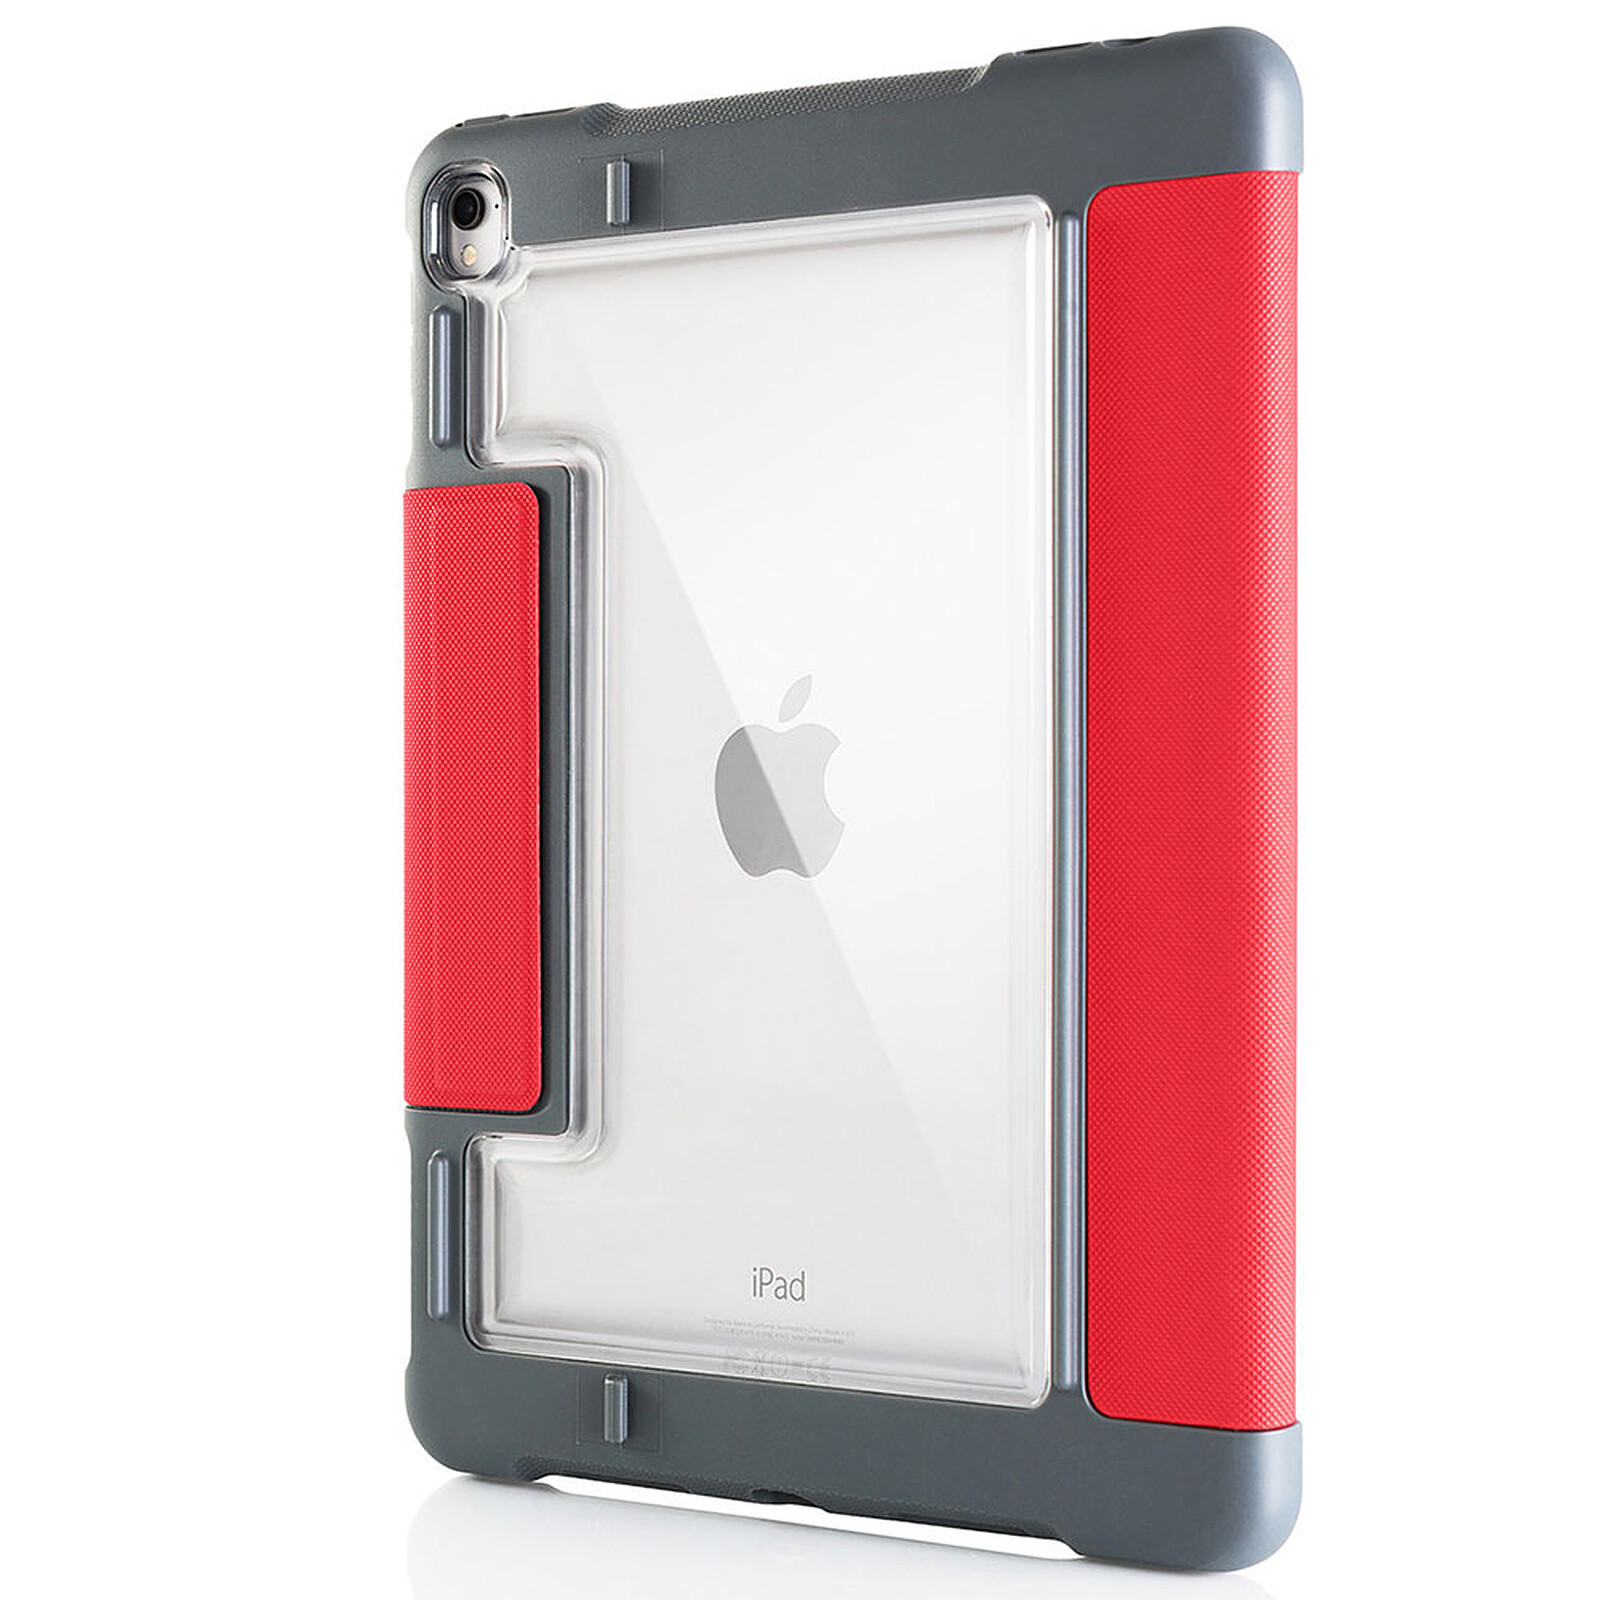 Stylet tablette iPad/iPhone - Rouge TARGUS : le stylet tablette à